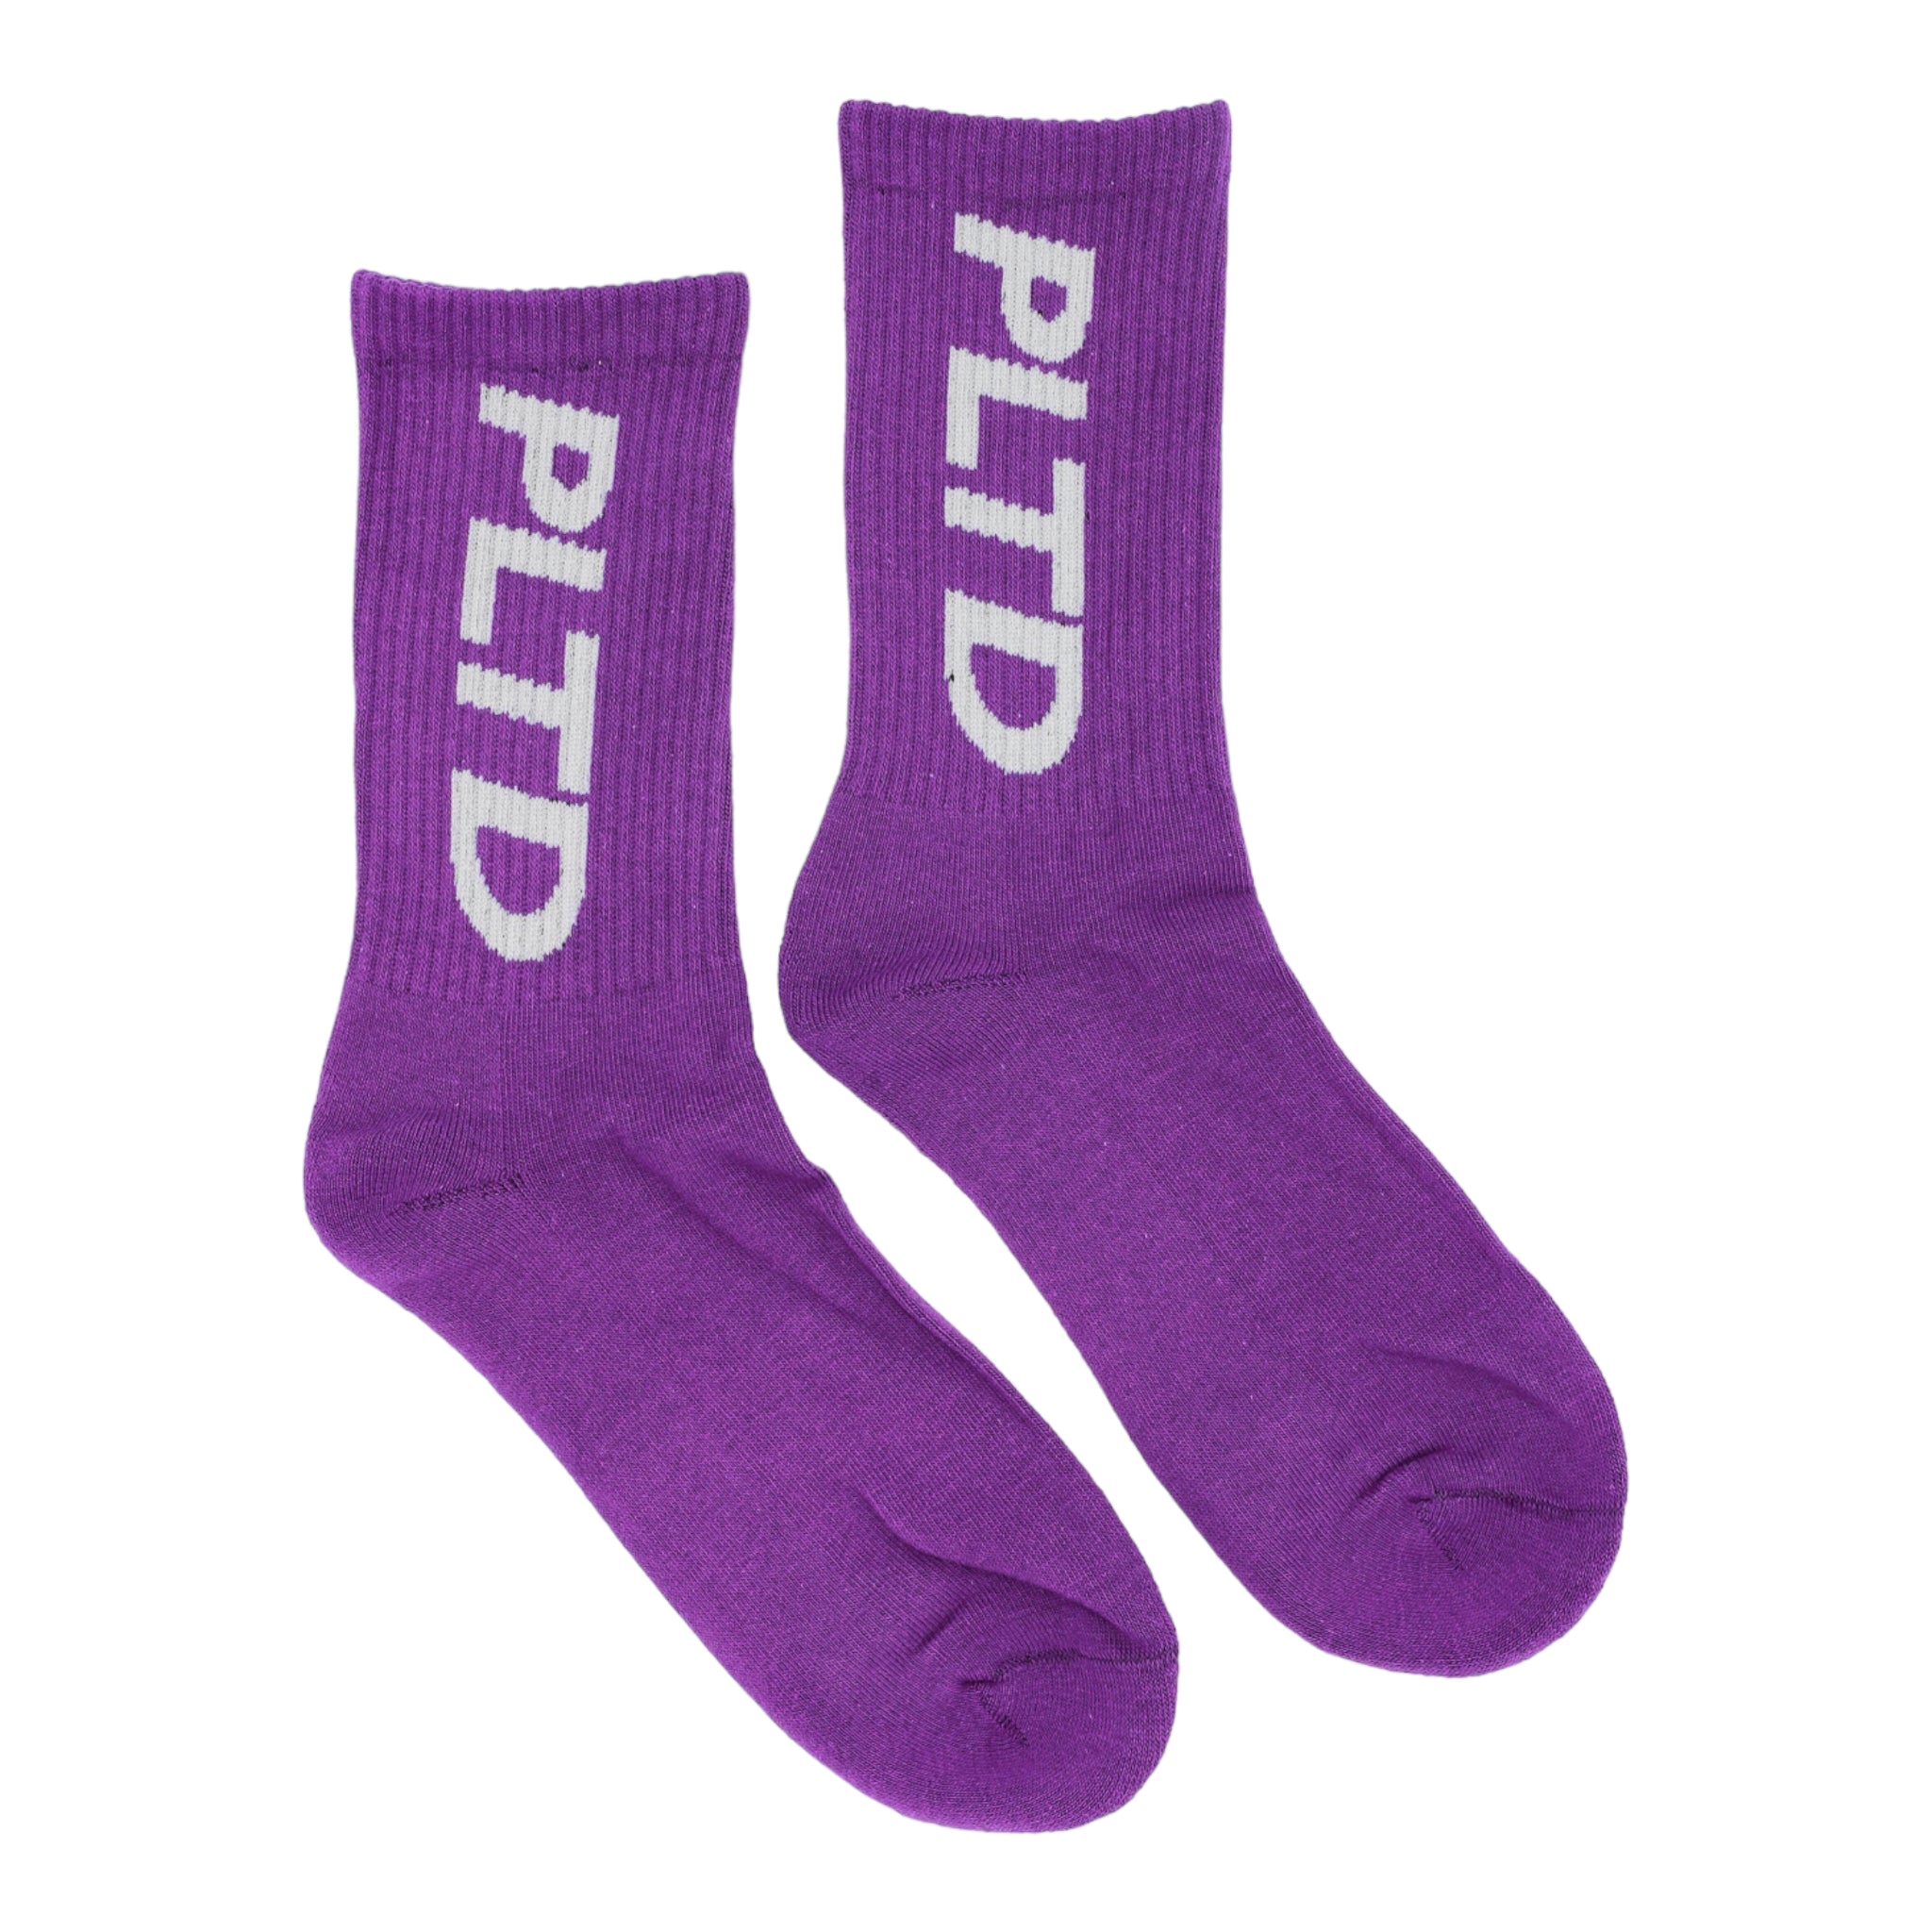 Team PLTD - Barney Socks